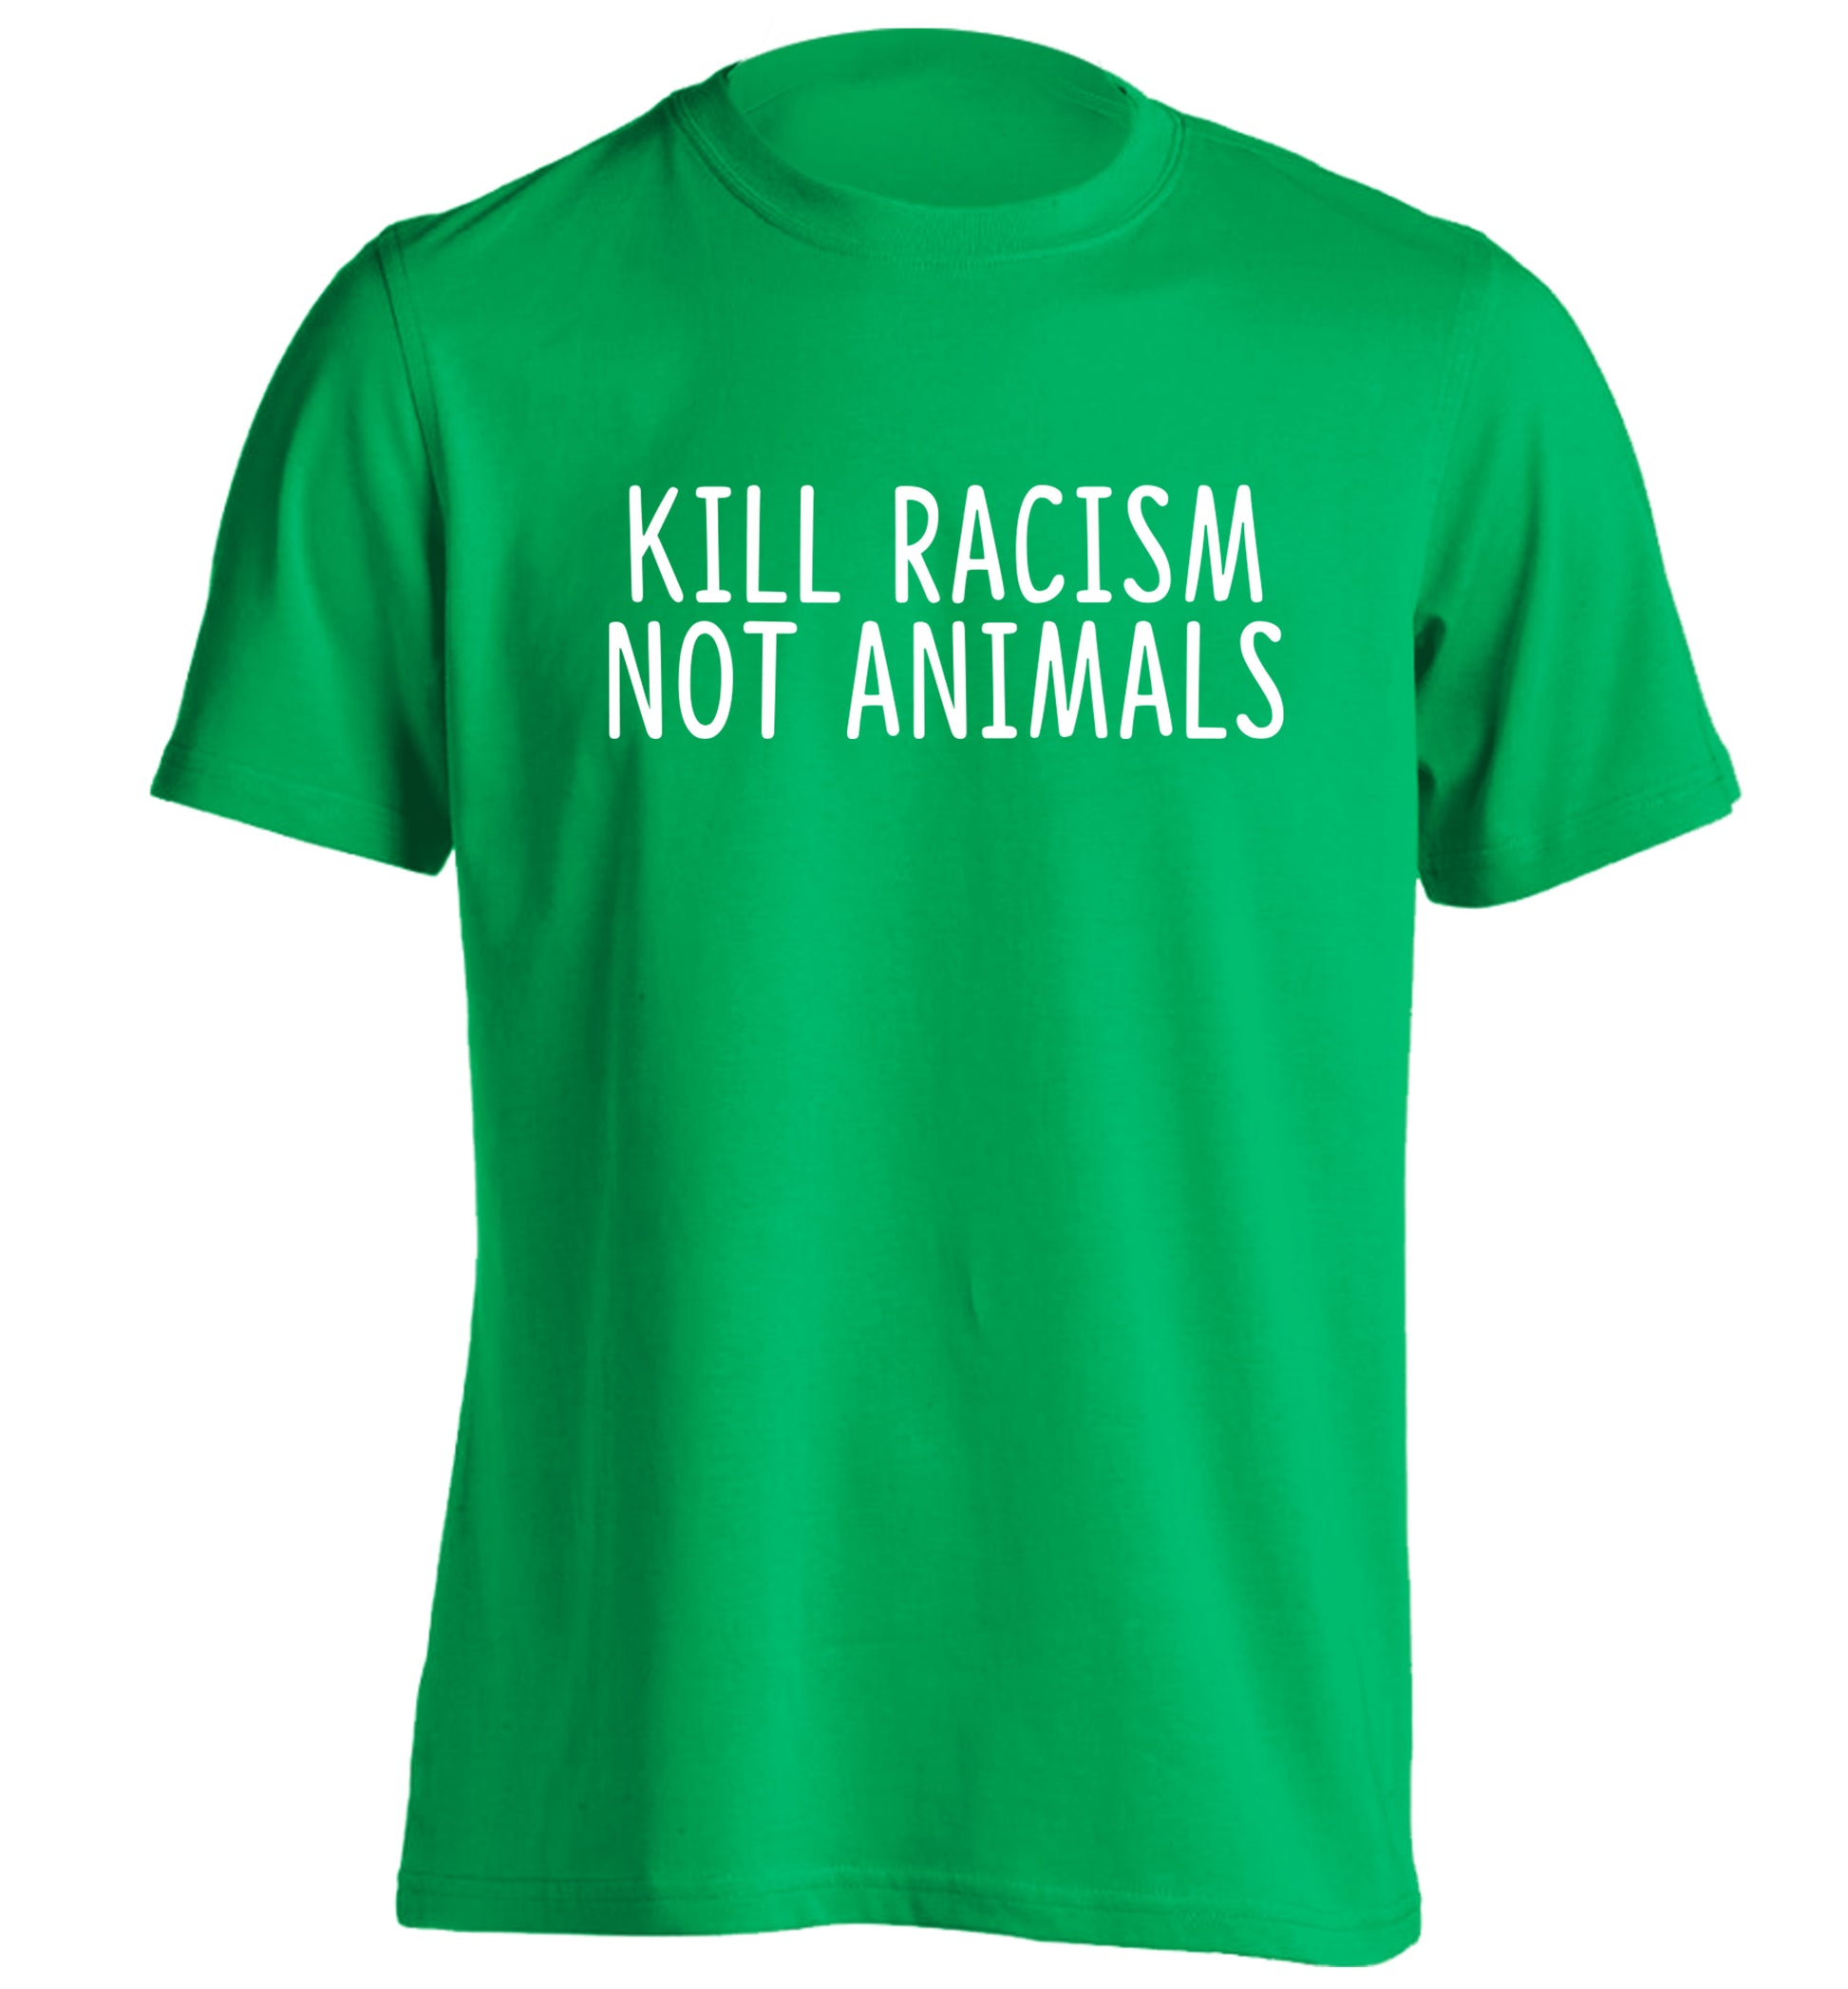 Kill Racism Not Animals adults unisex green Tshirt 2XL